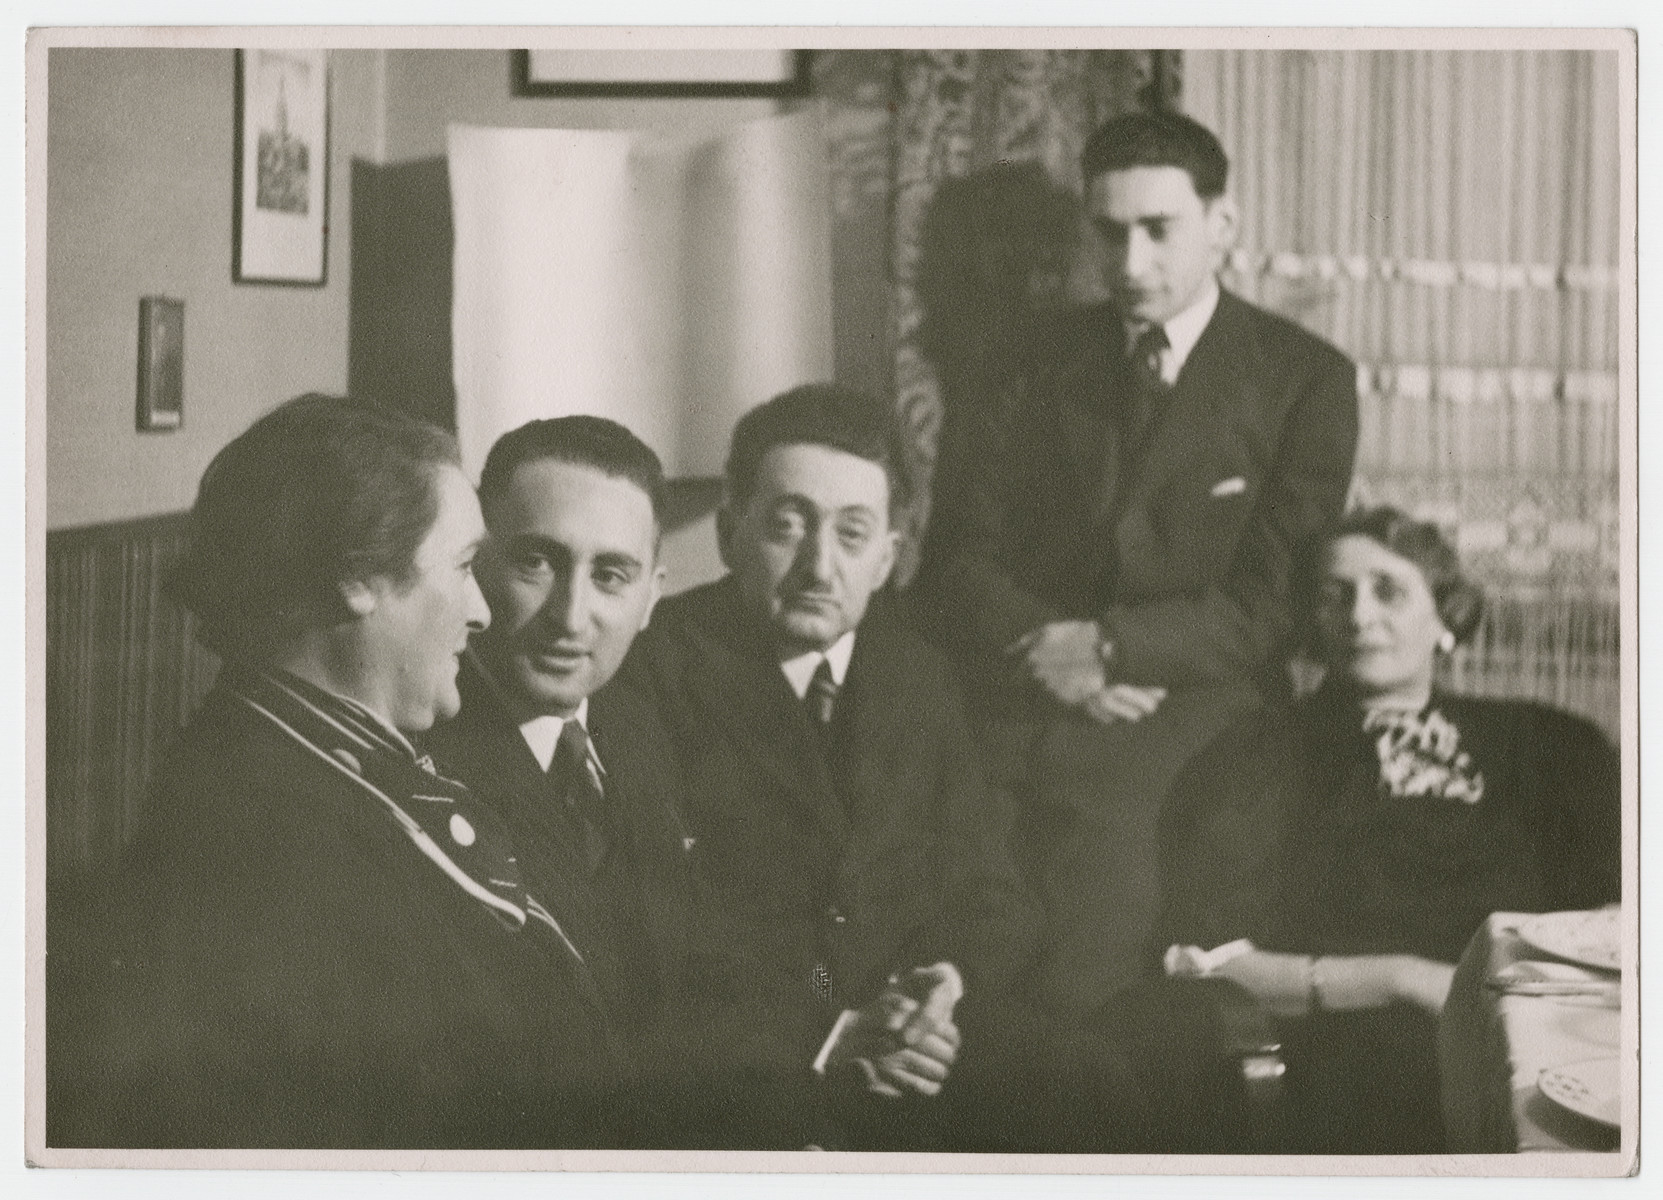 The Sonnemann family gathers in their living room.

Pictured are Bertha, Eric, Kurt, Max Sonnemann, and Frieda Hermann Berger.